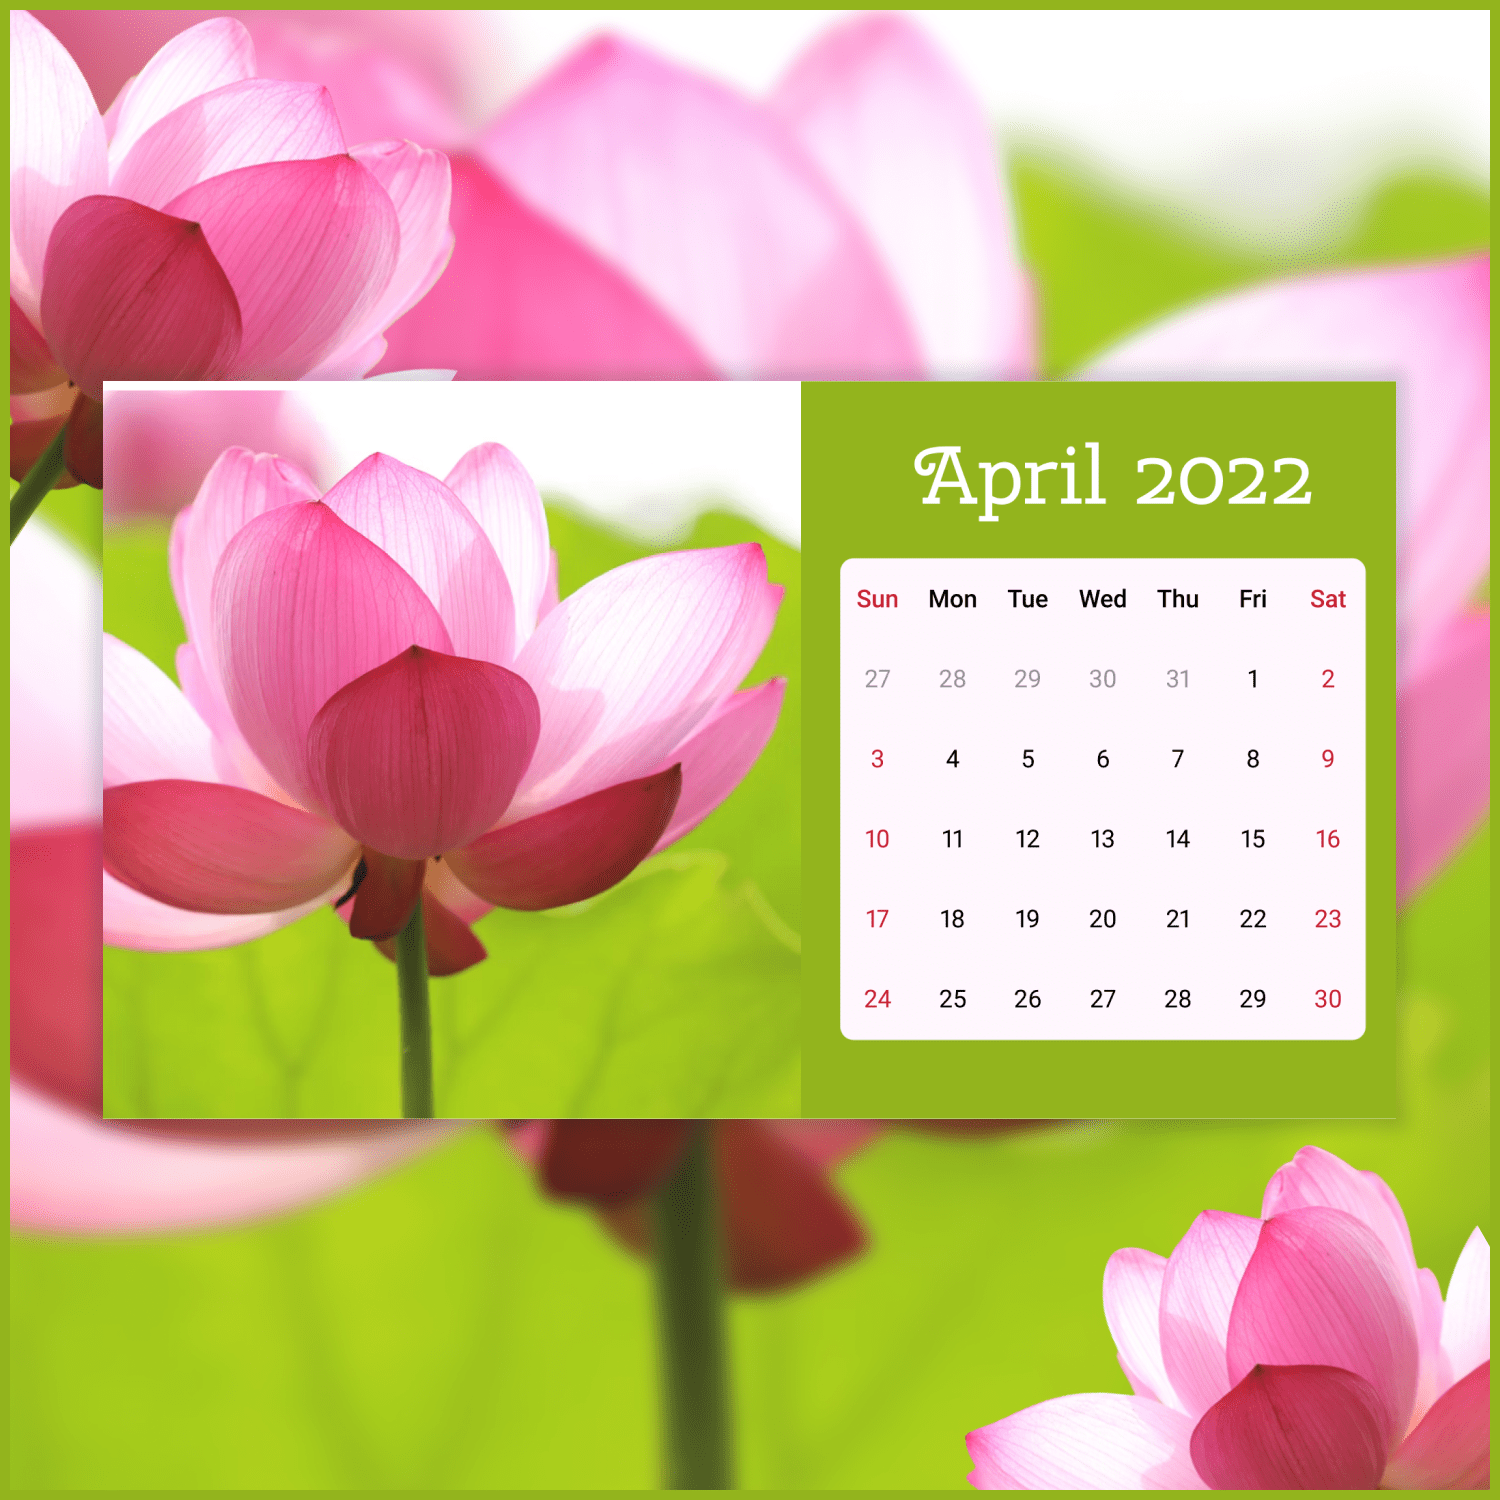 Free Downloadable April Calendar cover.